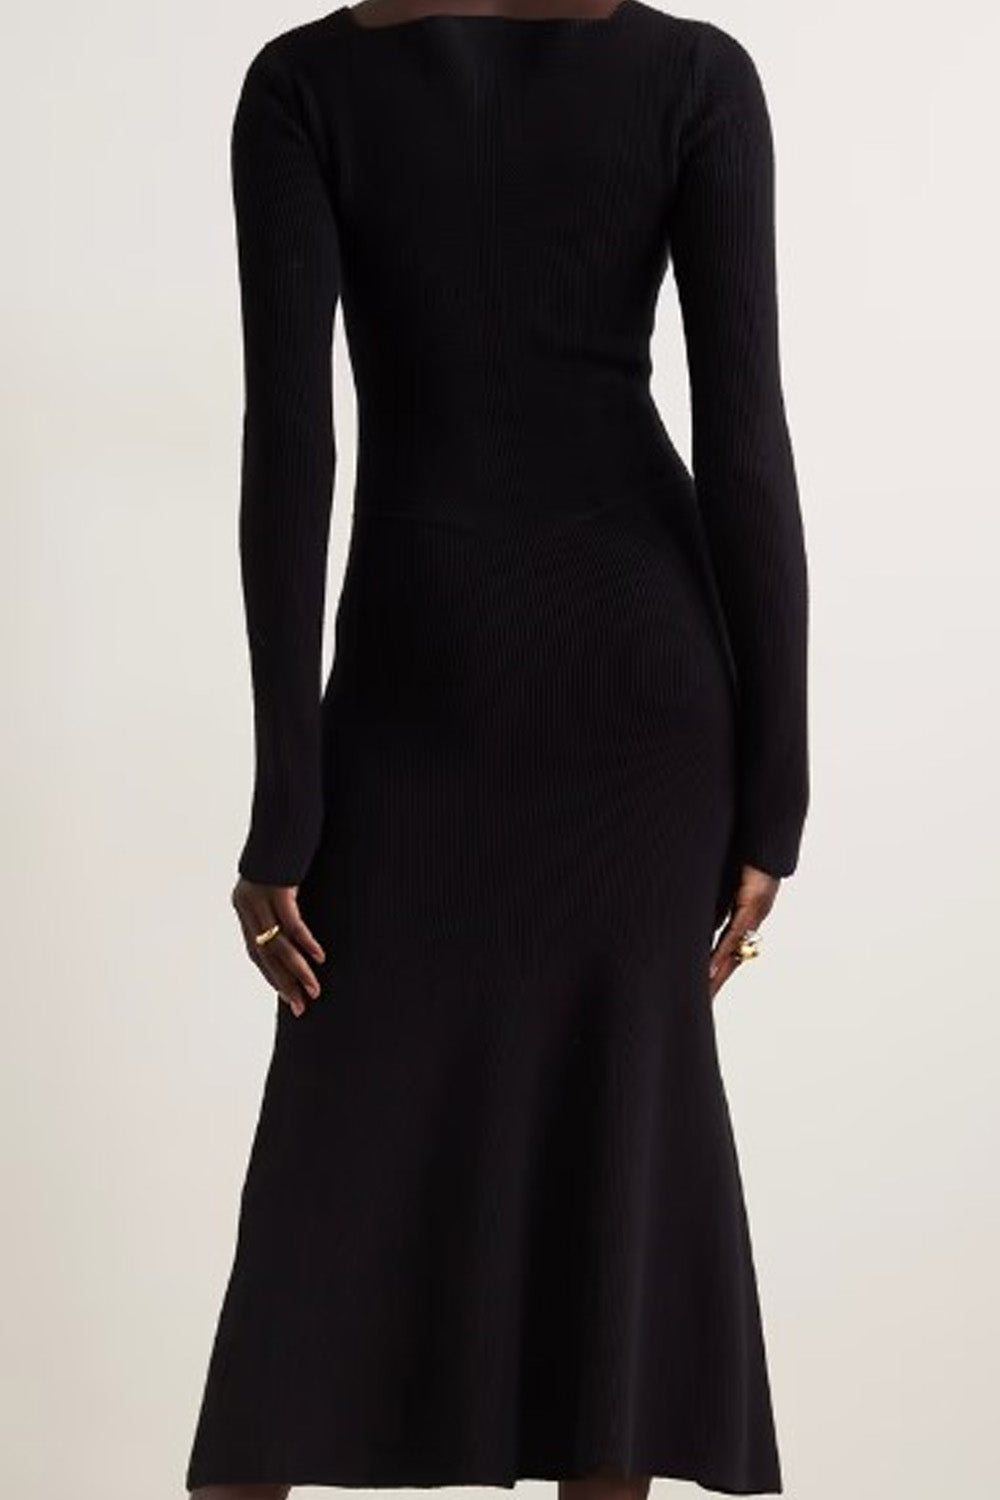 Solstice Black Dress